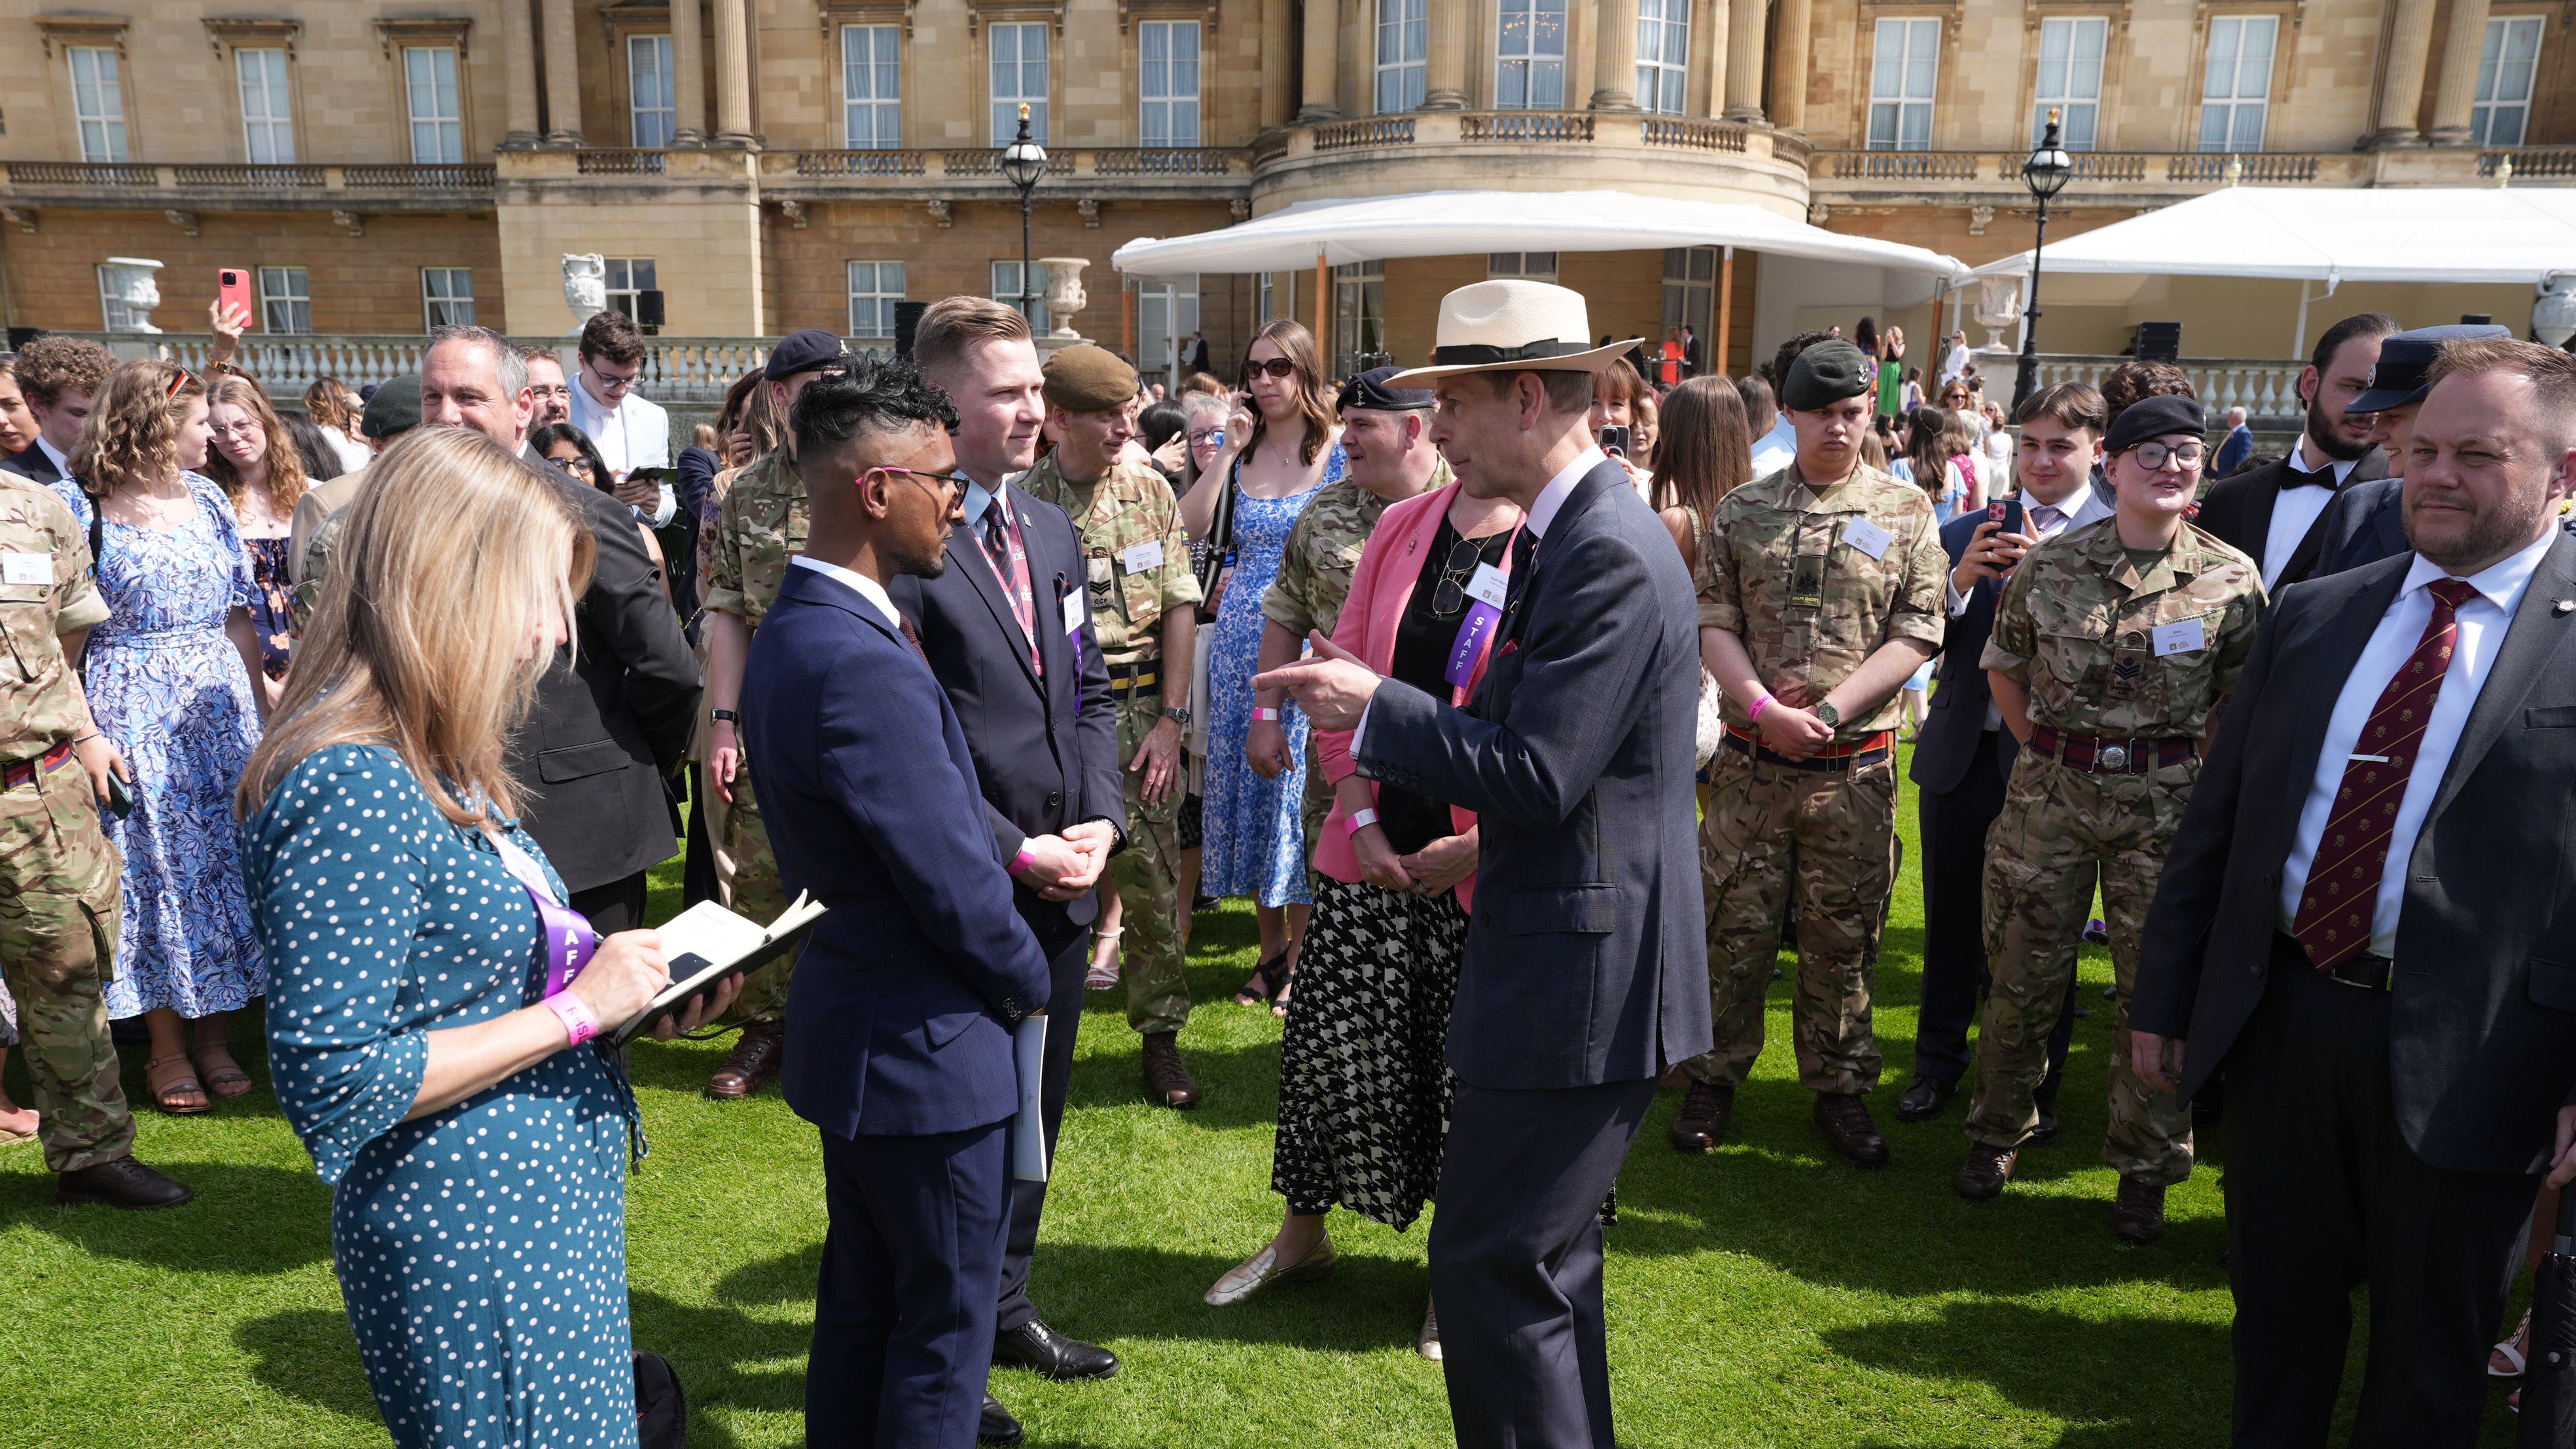 Edward hails gold Duke of Edinburgh’s Award winners at palace celebration